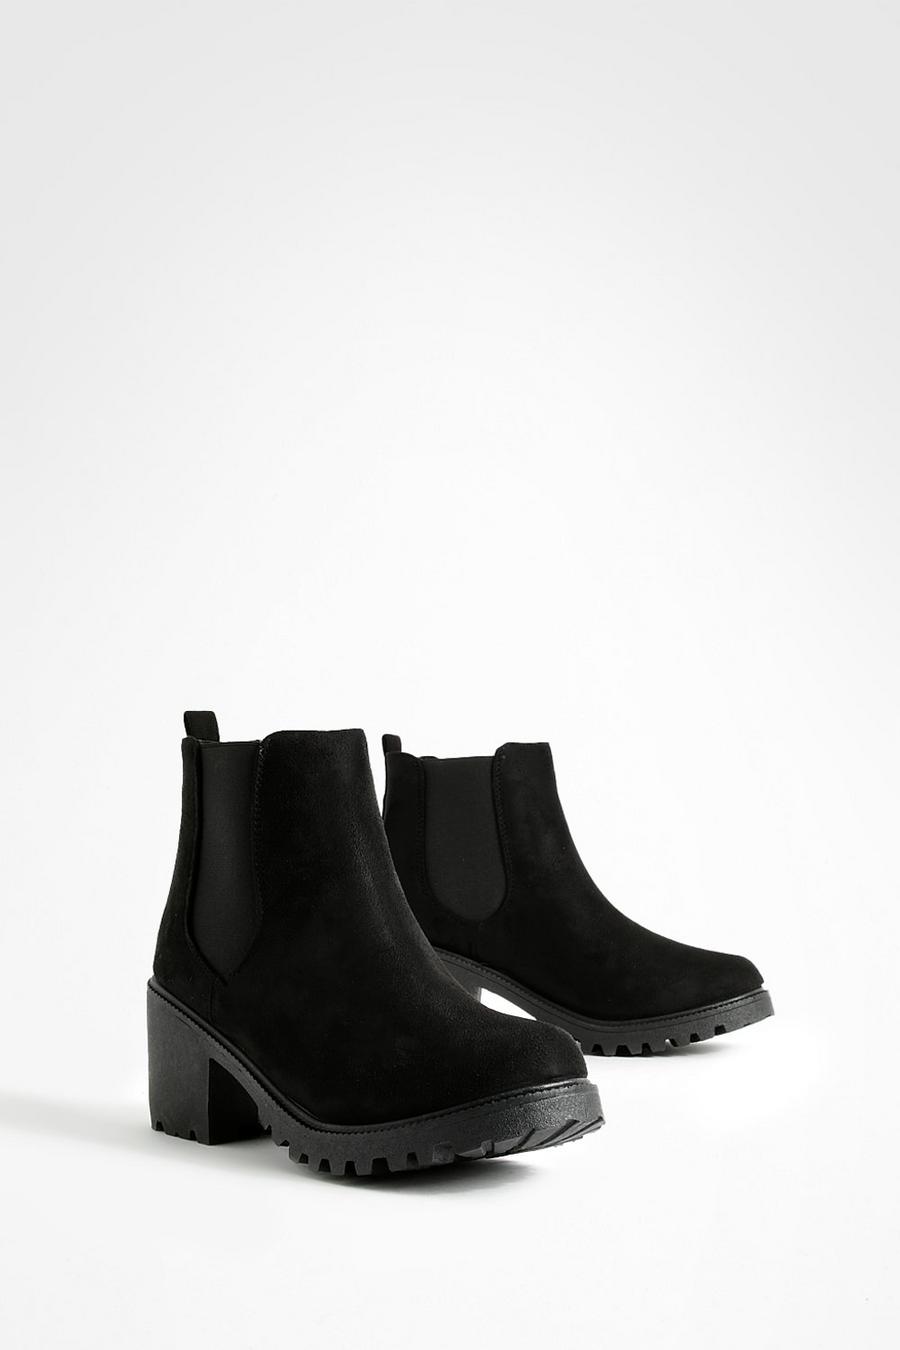 Chelsea-Boots mit dicker Profilsohle, Schwarz black